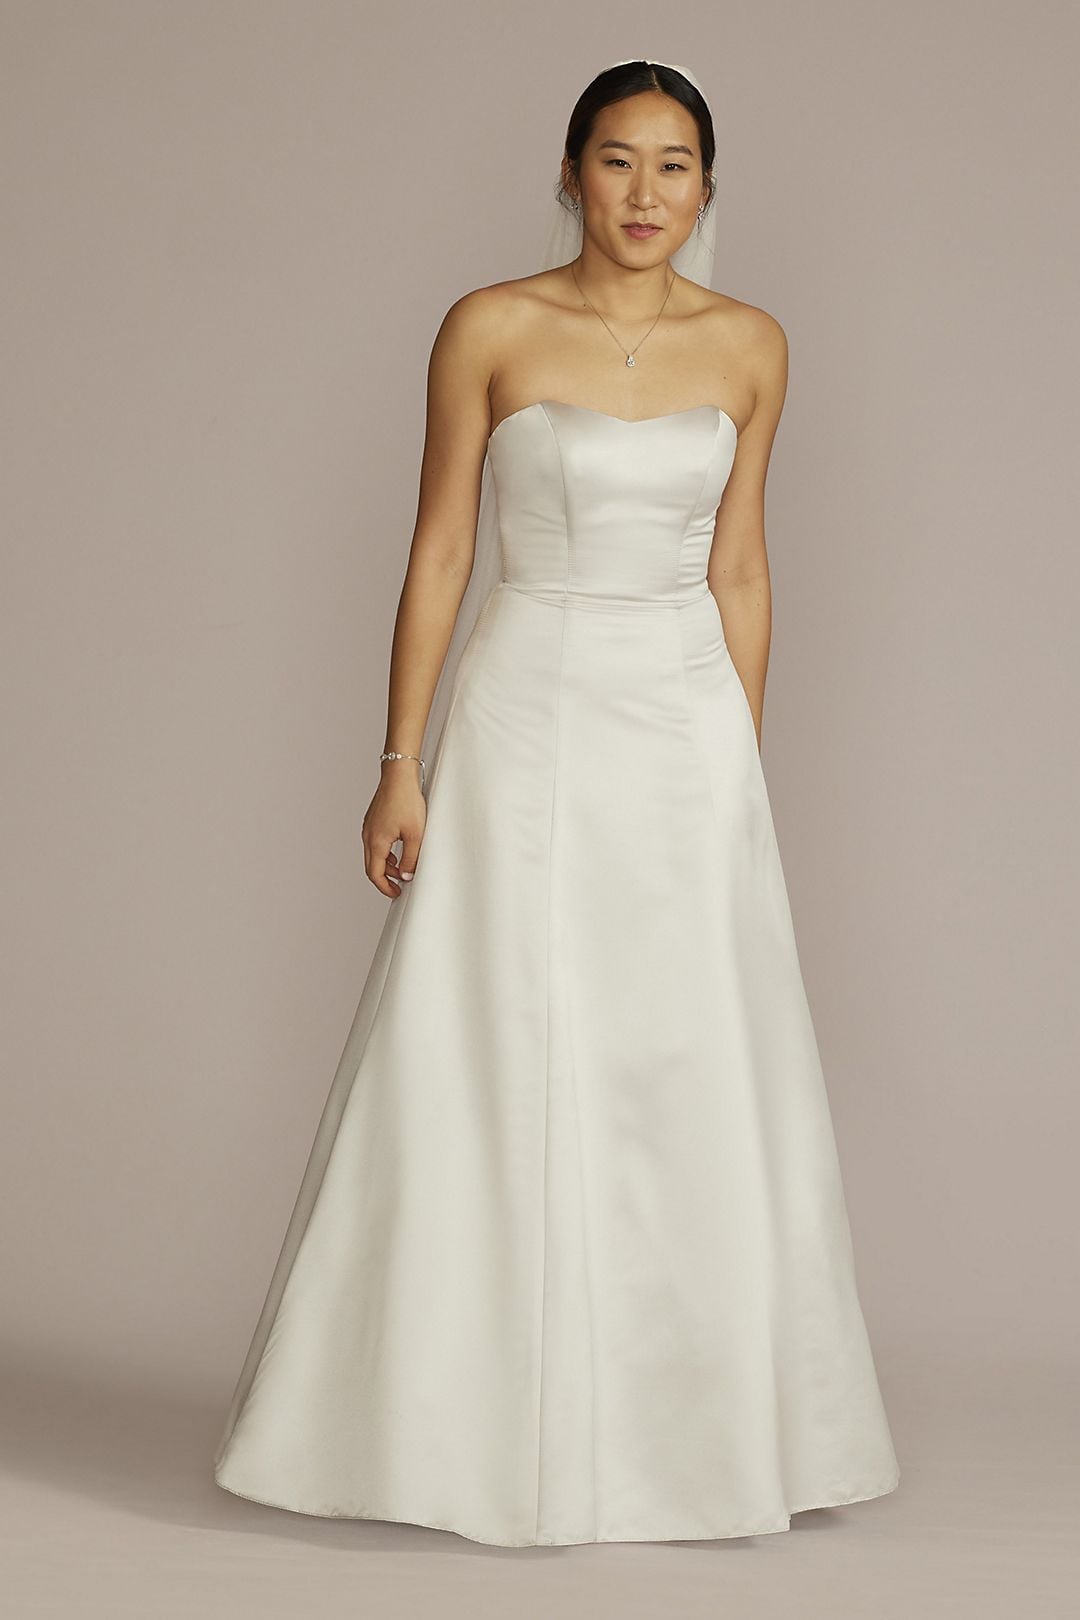 A Simple Modern Wedding Dress: David's Bridal Strapless A-Line Satin Wedding  Dress, 9 Modern Wedding Dresses For the Contemporary Bride